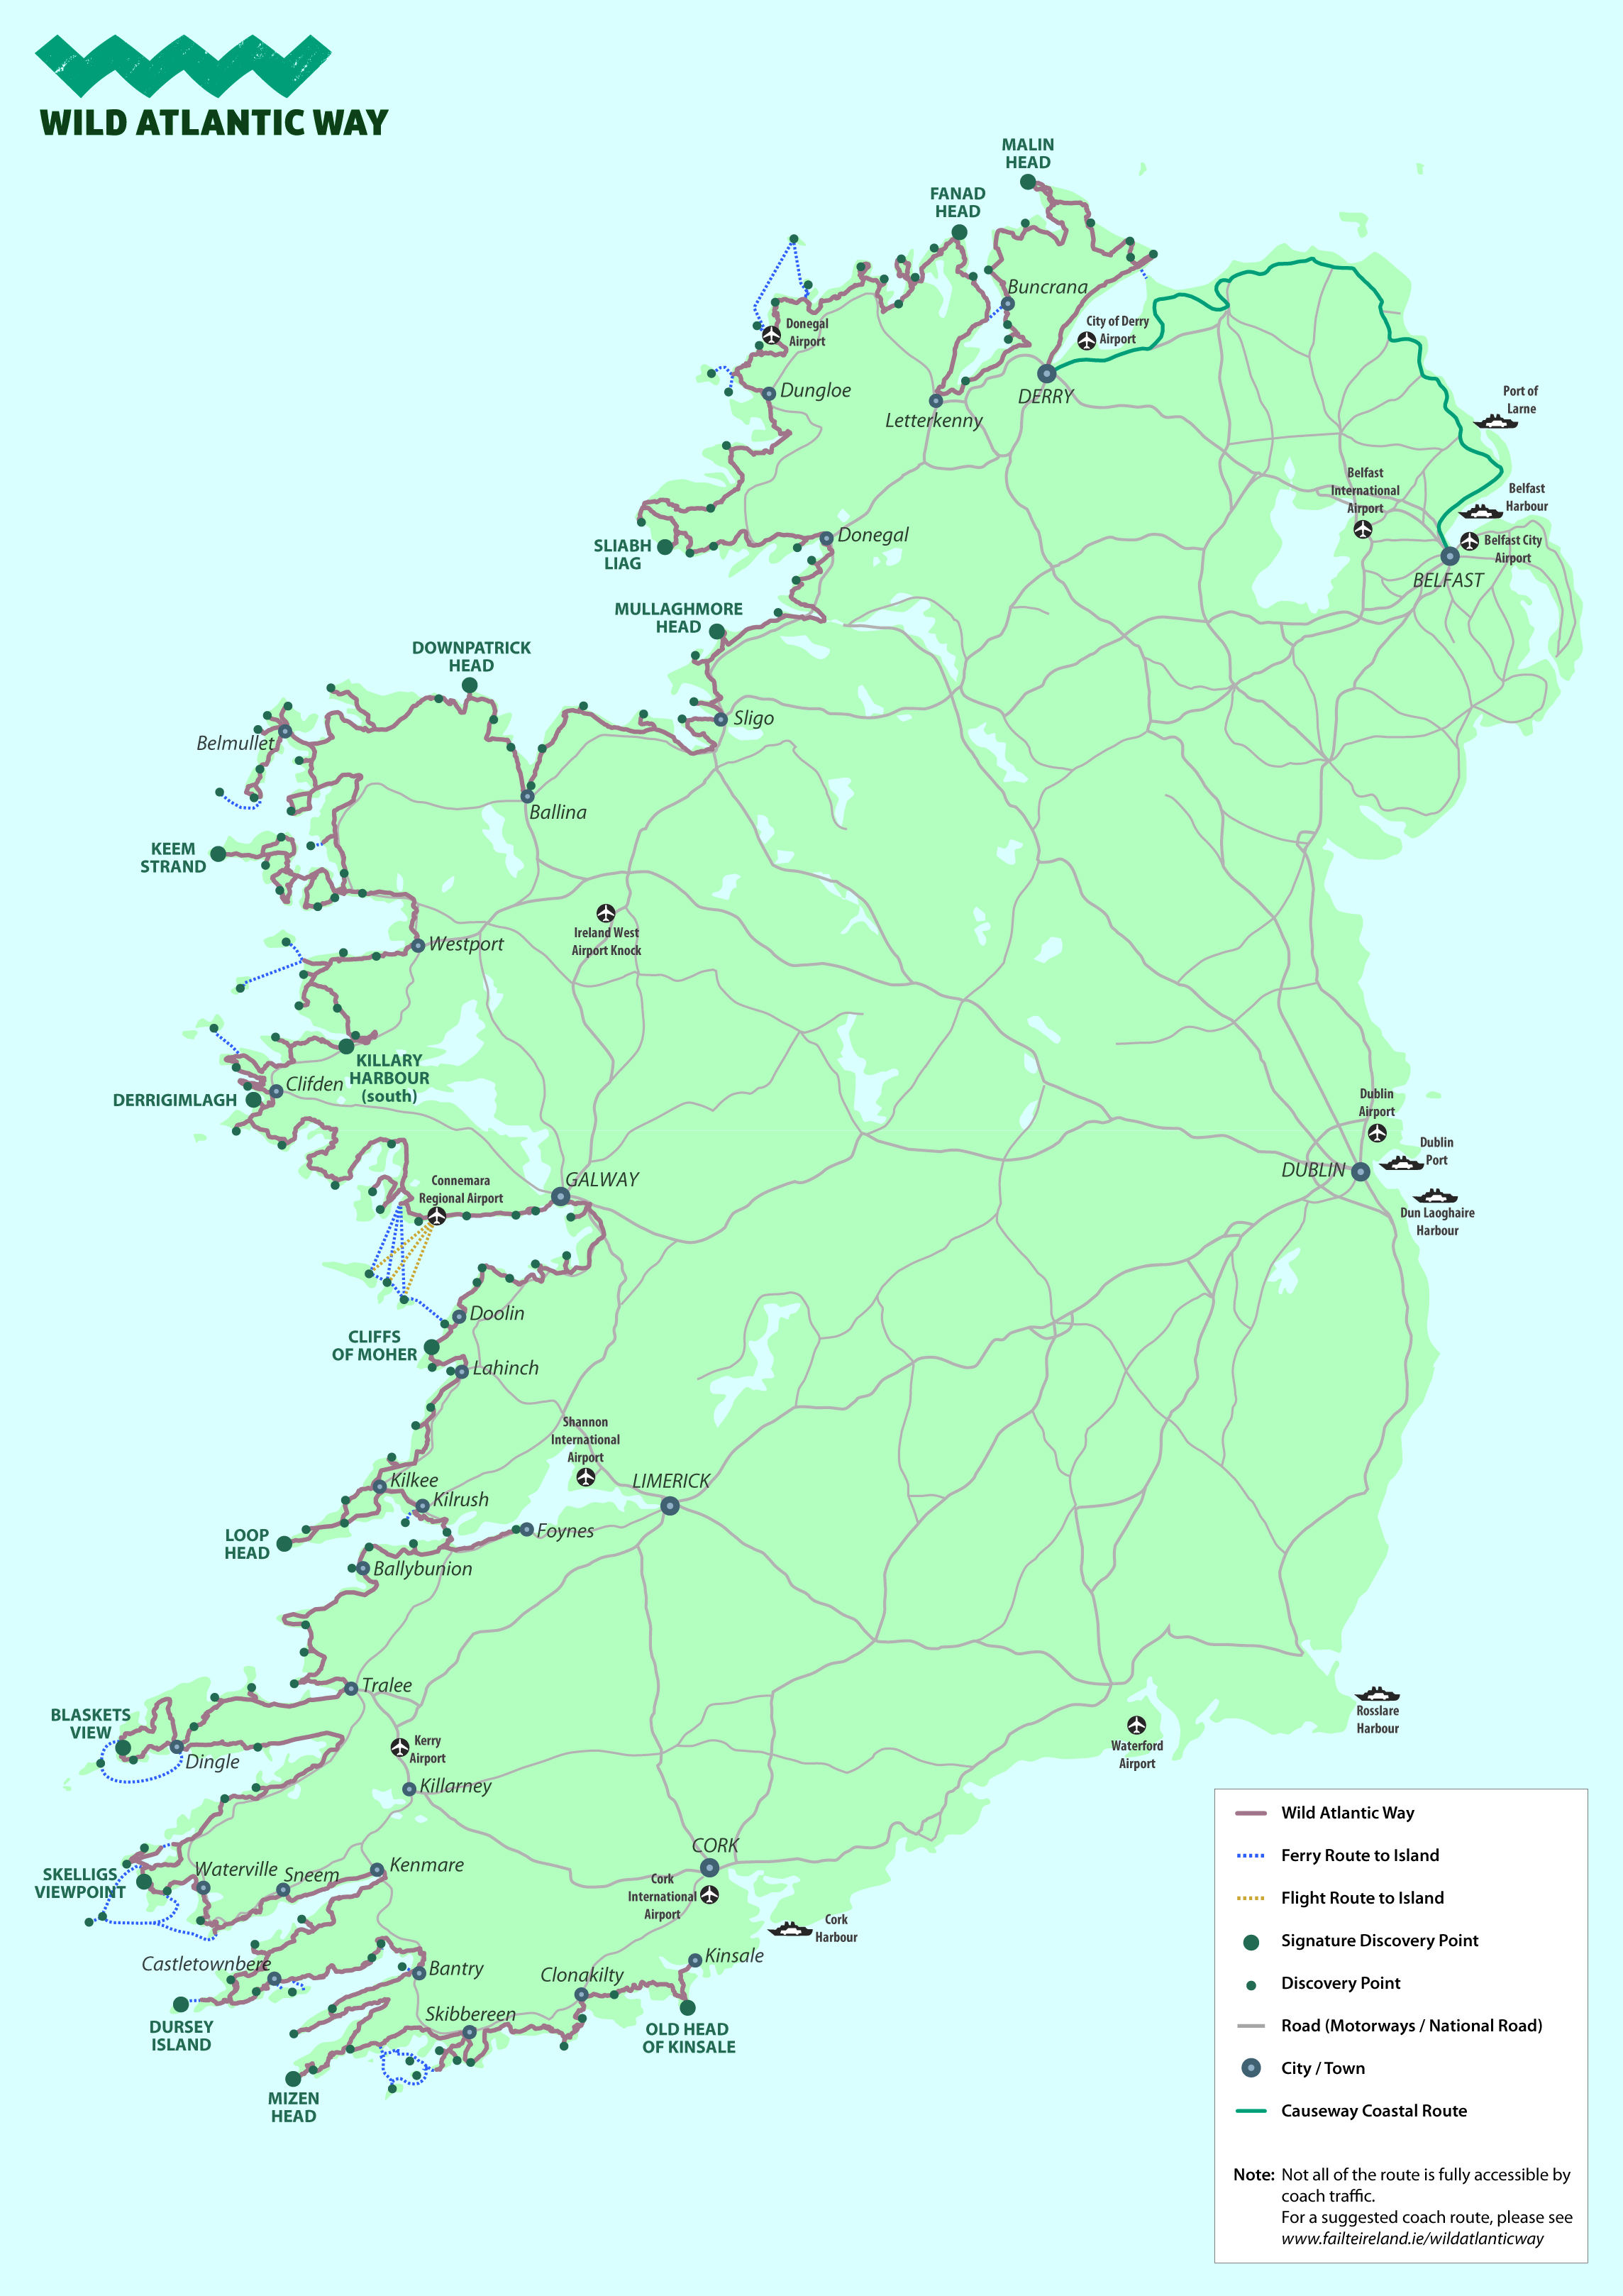 Failte Ireland - The Wild Atlantic Way | Fáilte Ireland